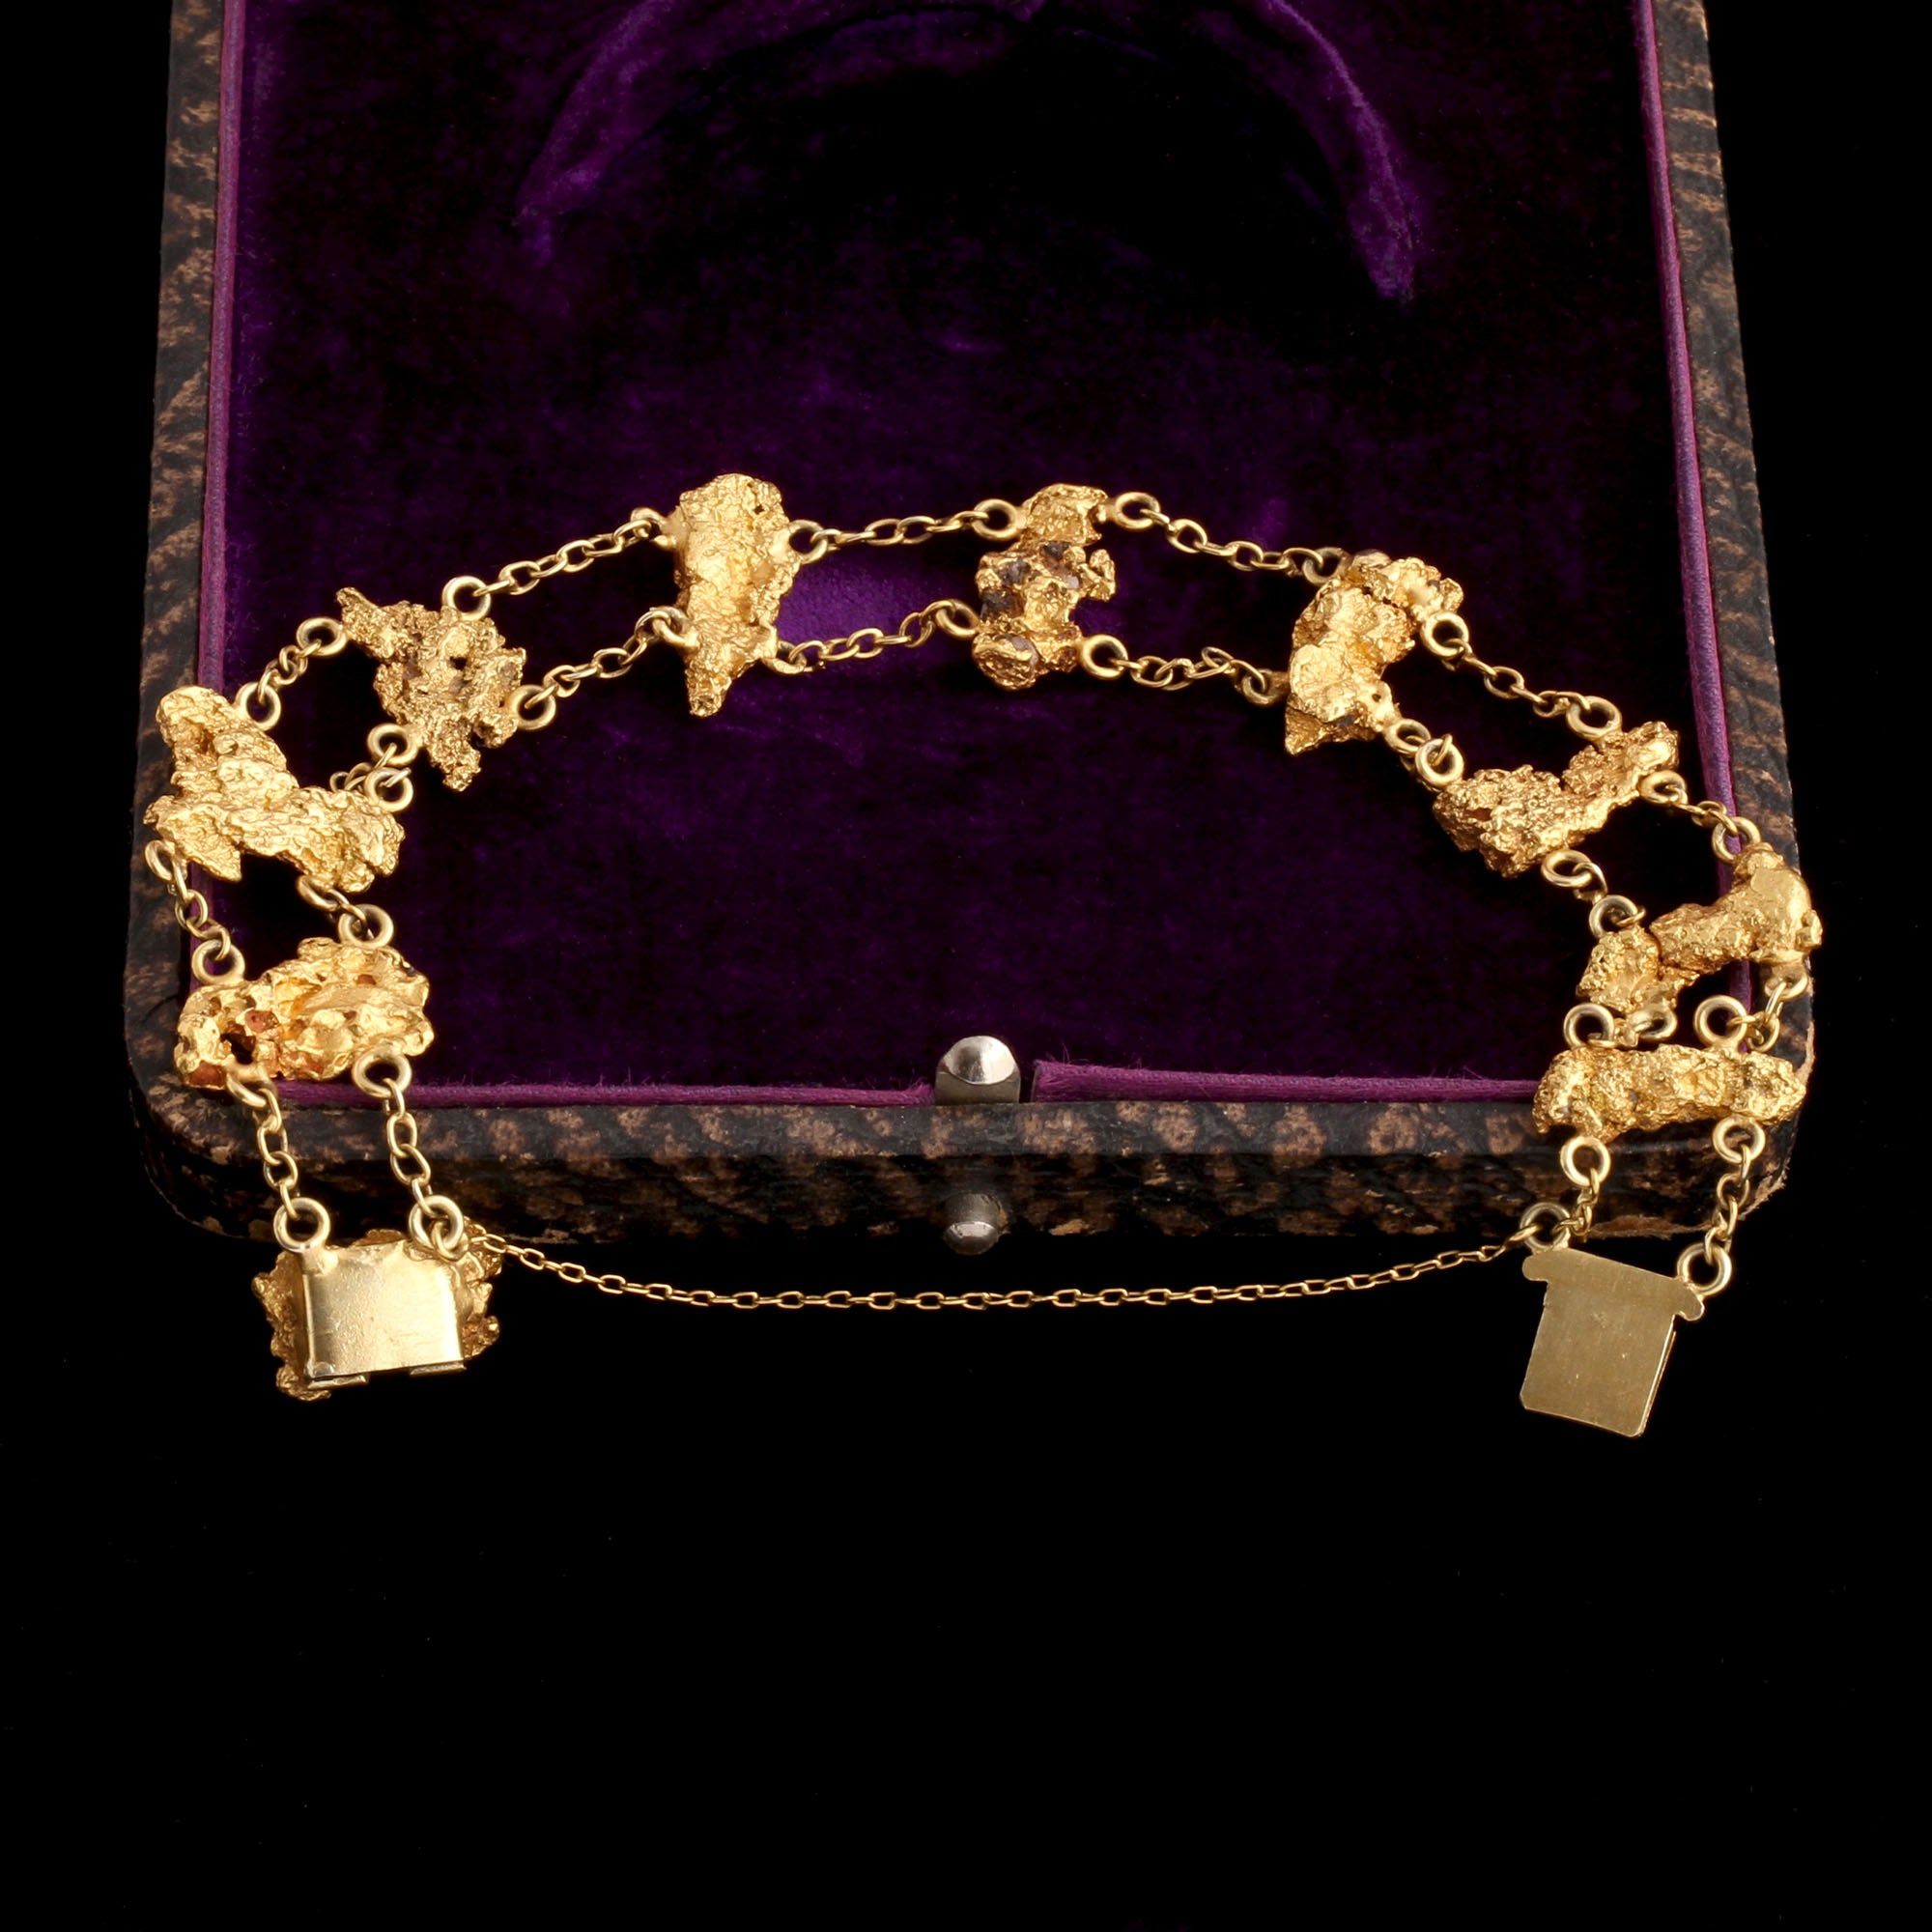 Handmade Peacock oxidized antique gold tone bangle bracelet at ₹950 | Azilaa